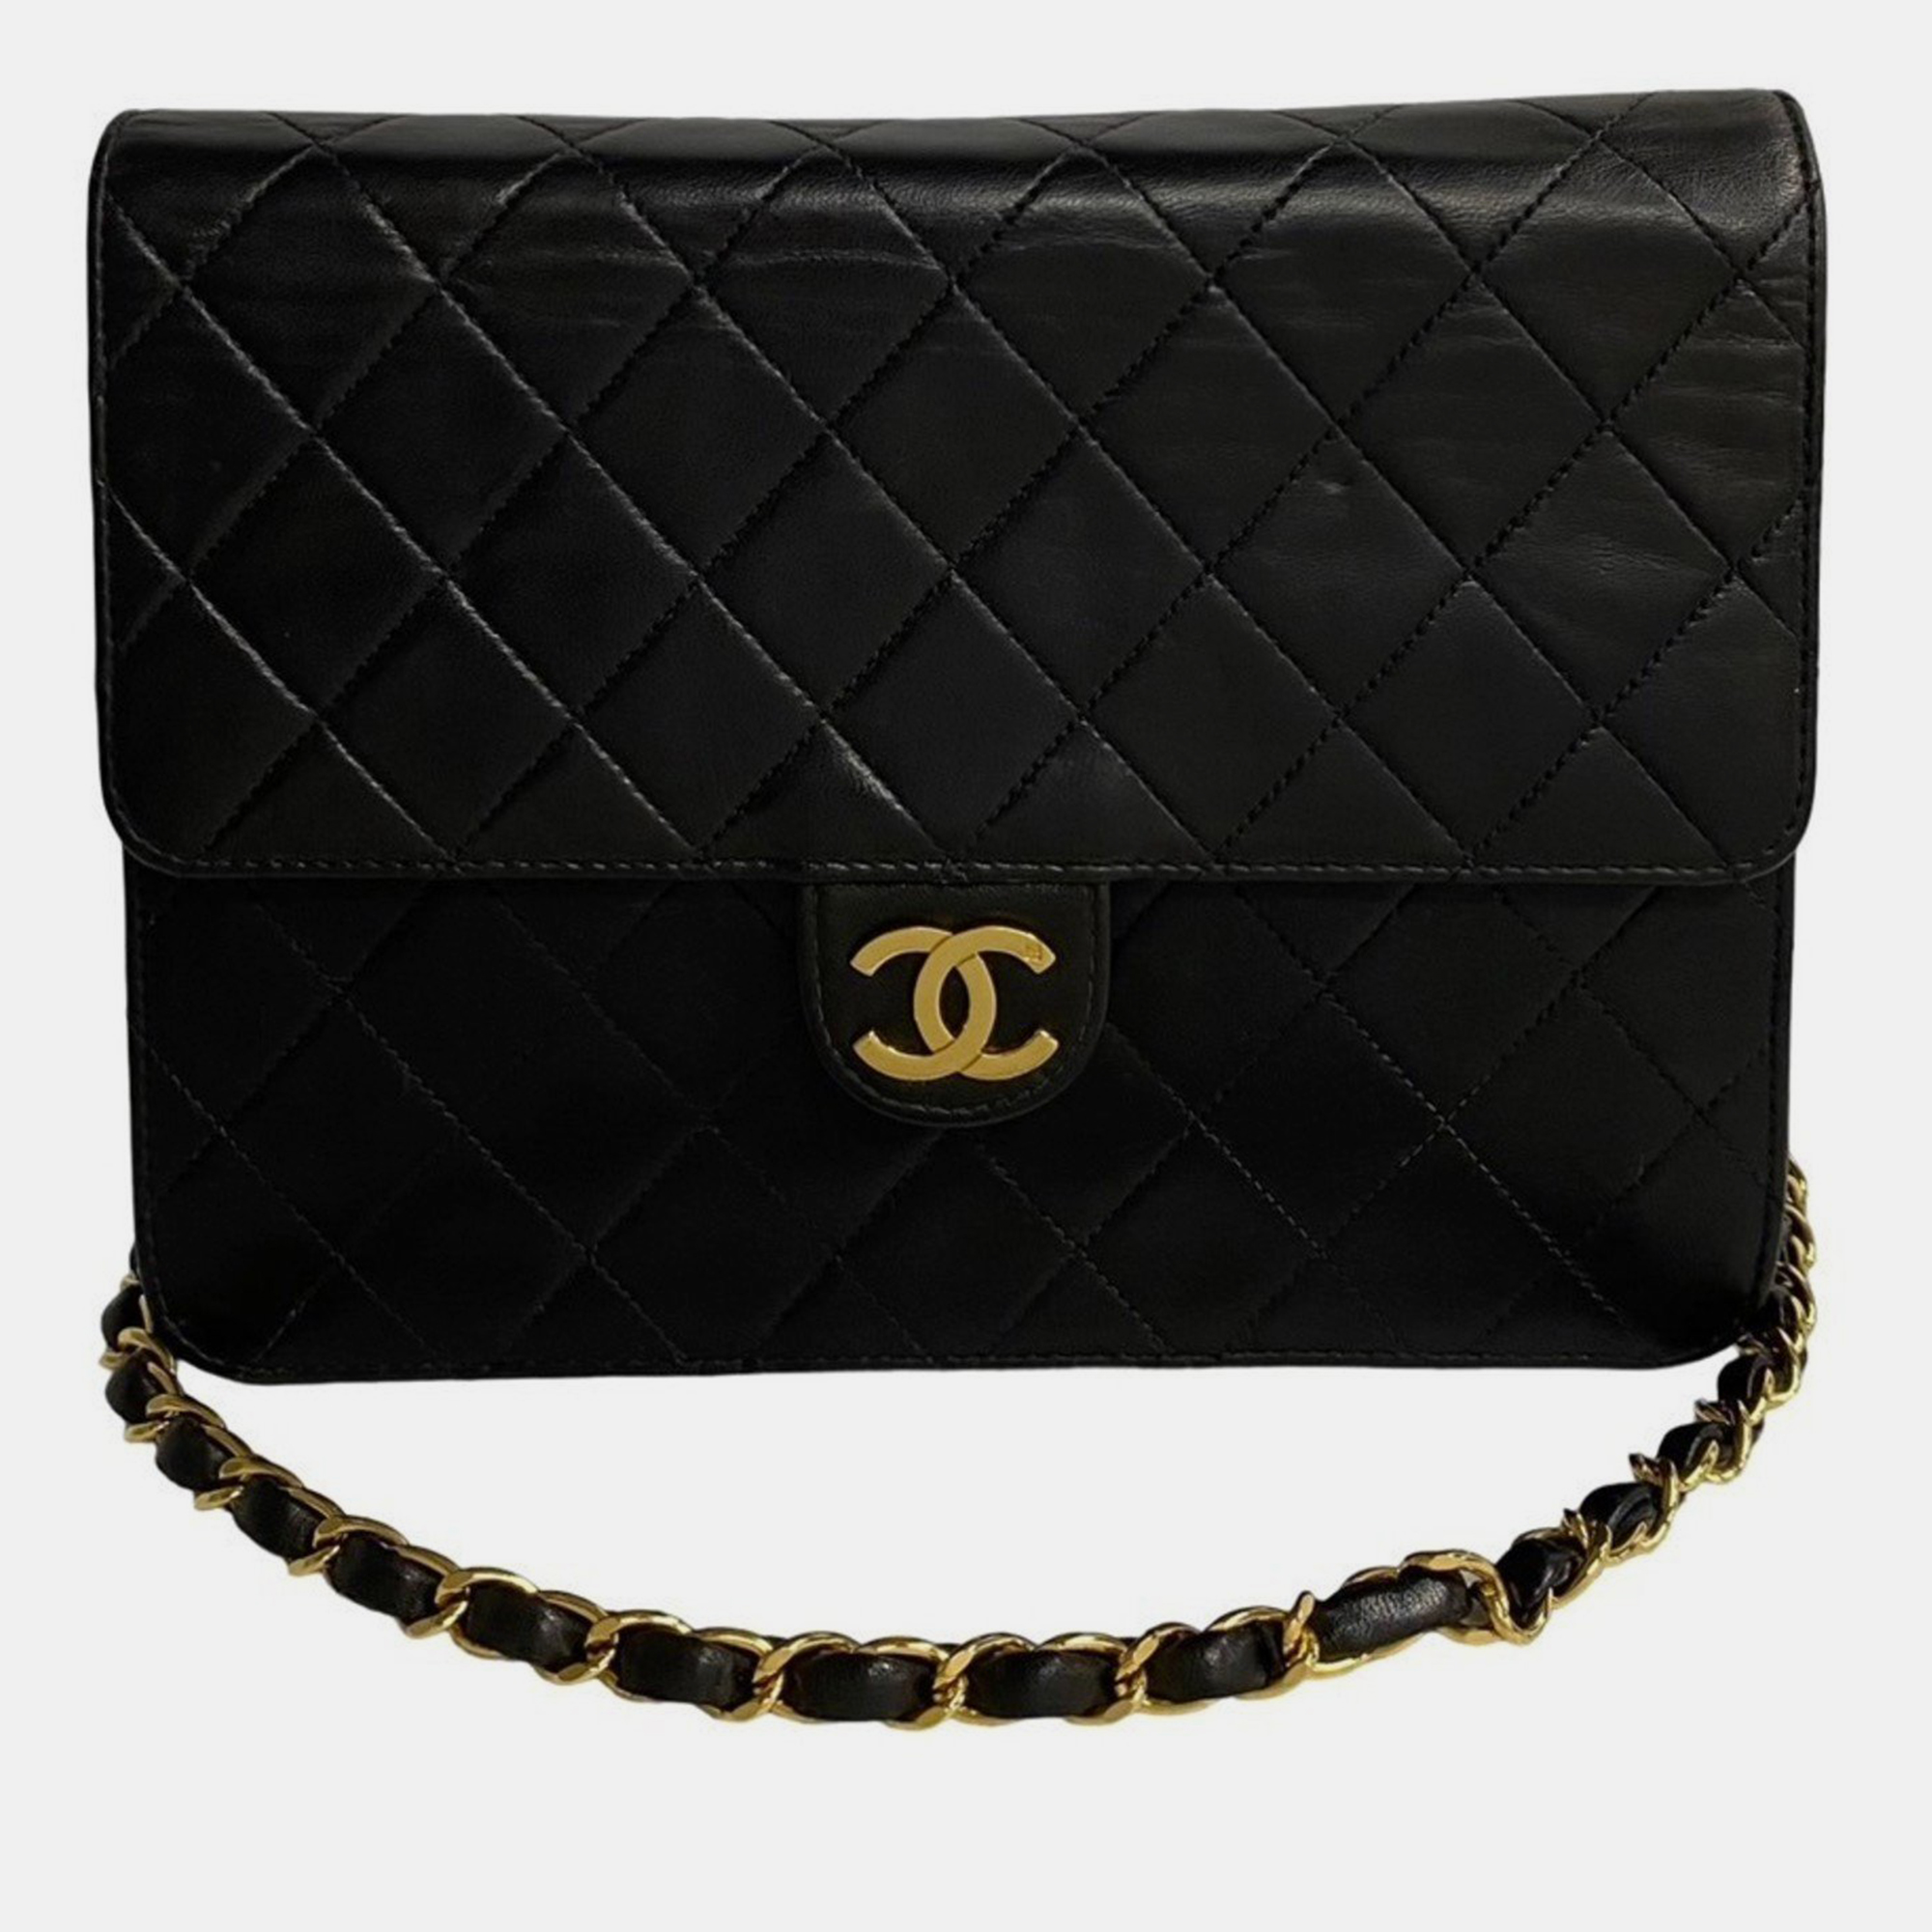 Chanel black leather square cc flap bag